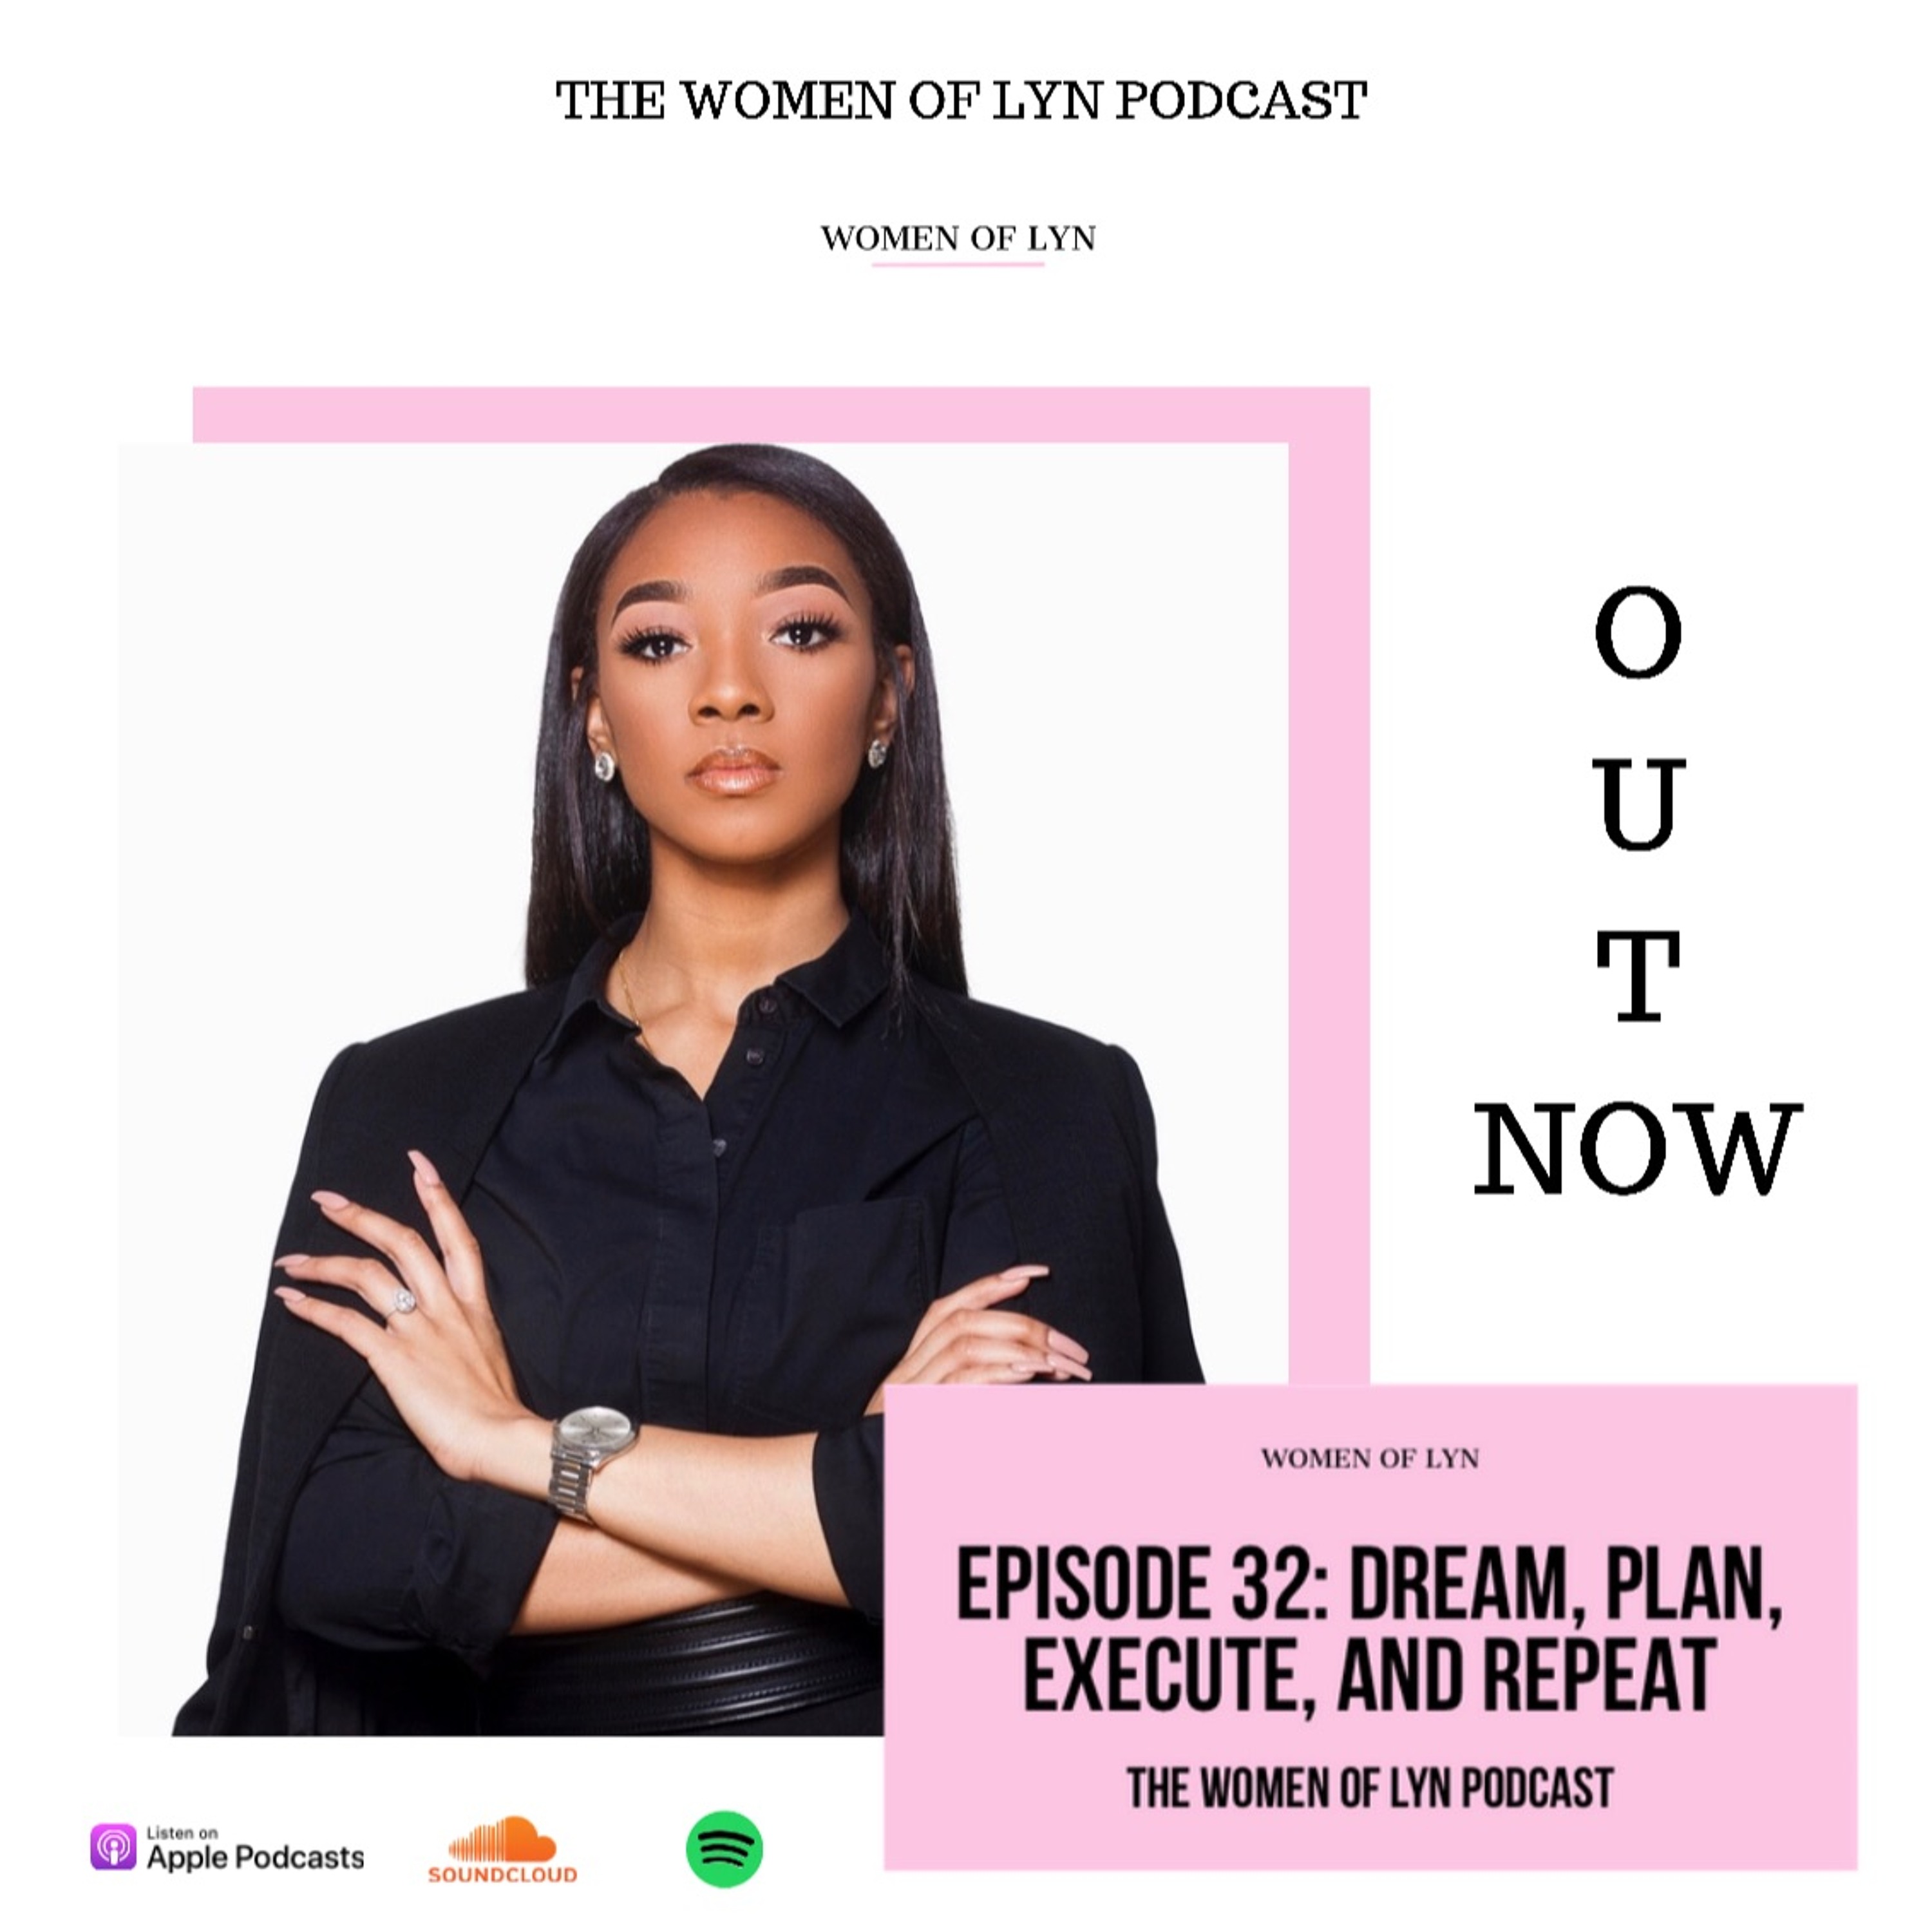 Episode 32: Dream, Plan, Execute, Repeat